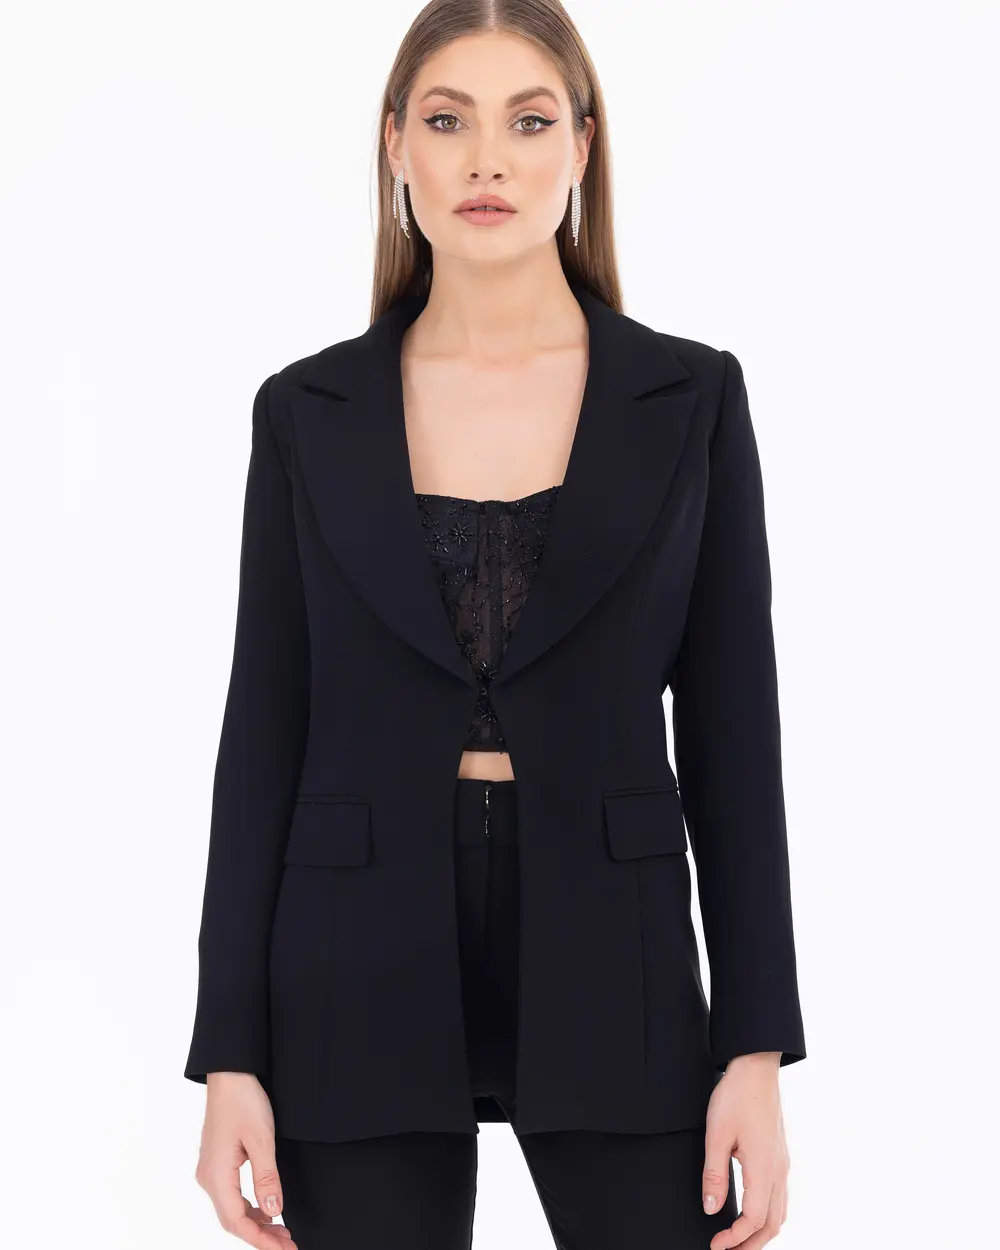 Jacket Collar Crepe Fabric Evening Dress Suit